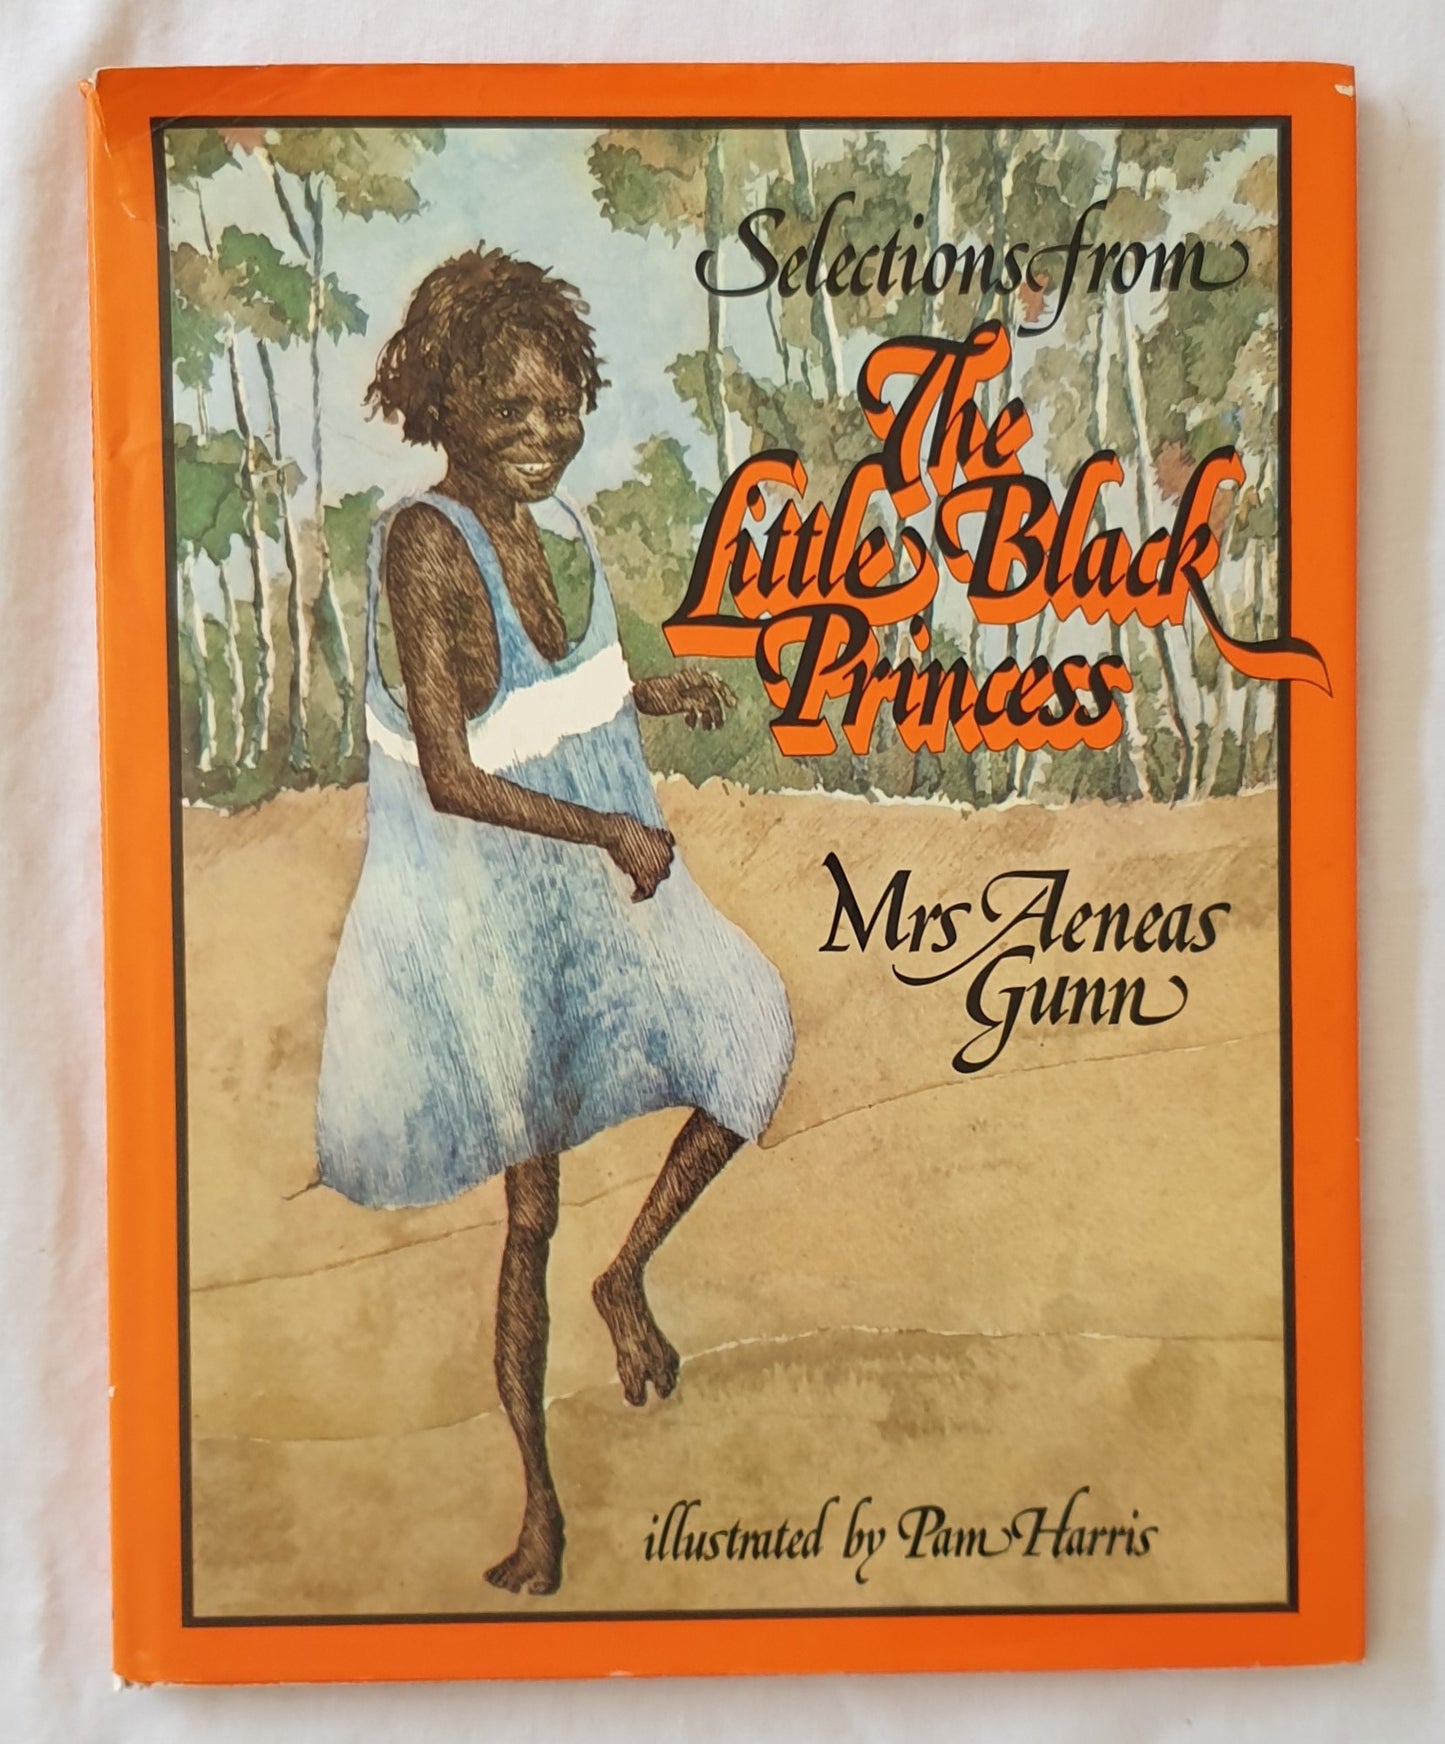 Selections form The Little Black Princess by Mrs Aeneas Gunn